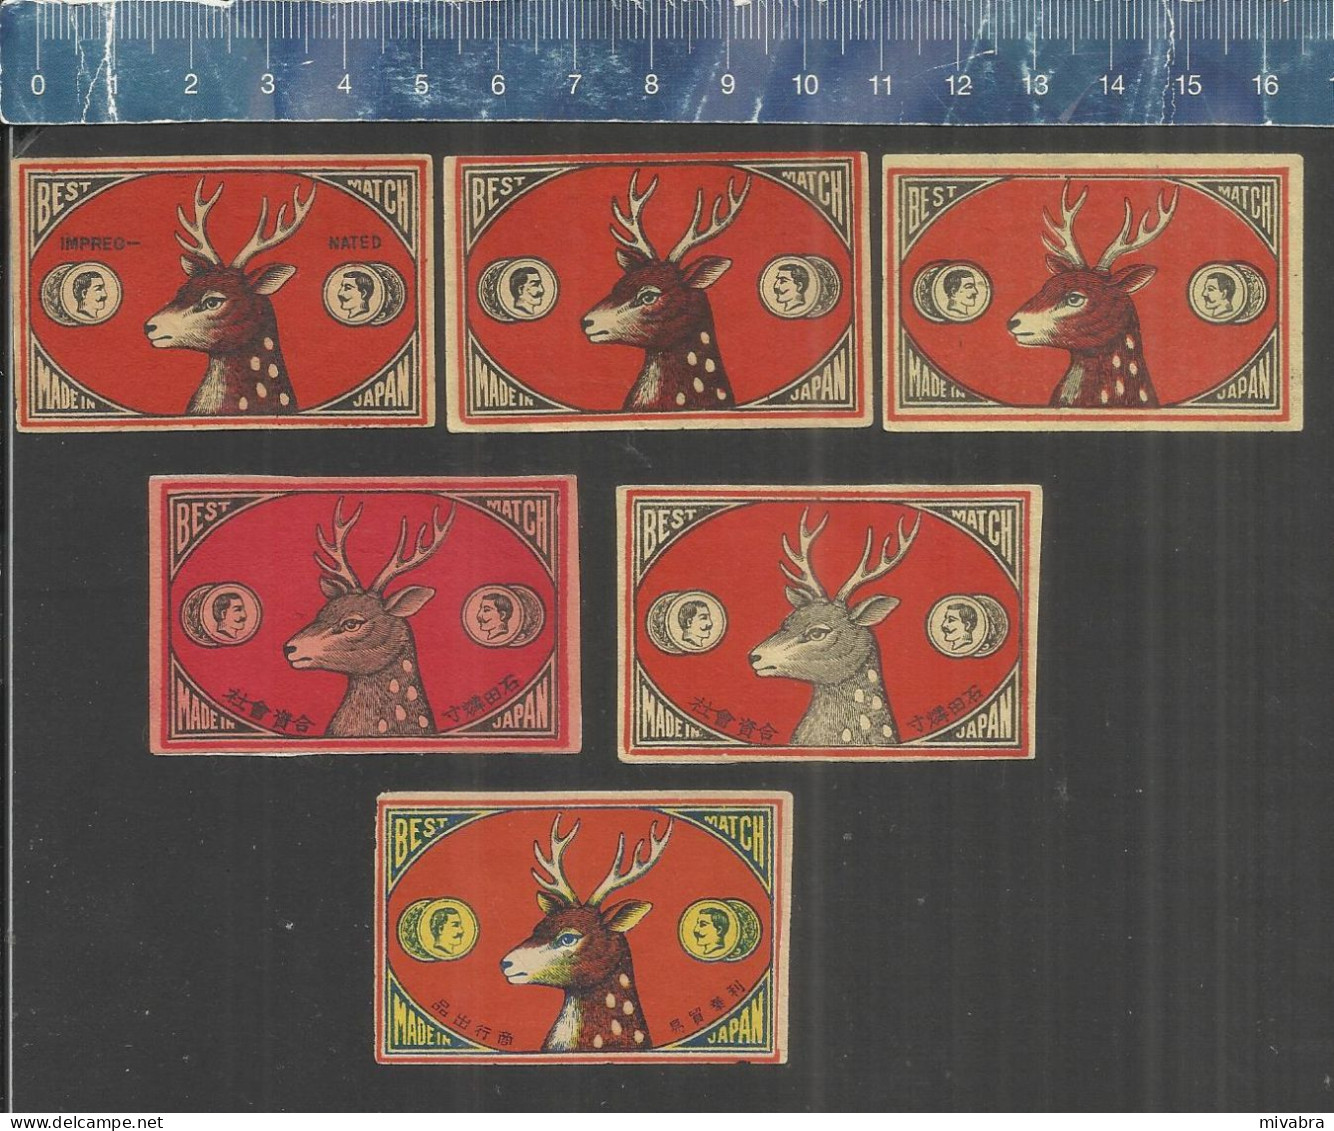 STAGS HEAD BEST MATCH  (DEER HERT CERF HIRSCHE) OLD VINTAGE MATCHBOX LABELS MADE JAPAN - Cajas De Cerillas - Etiquetas